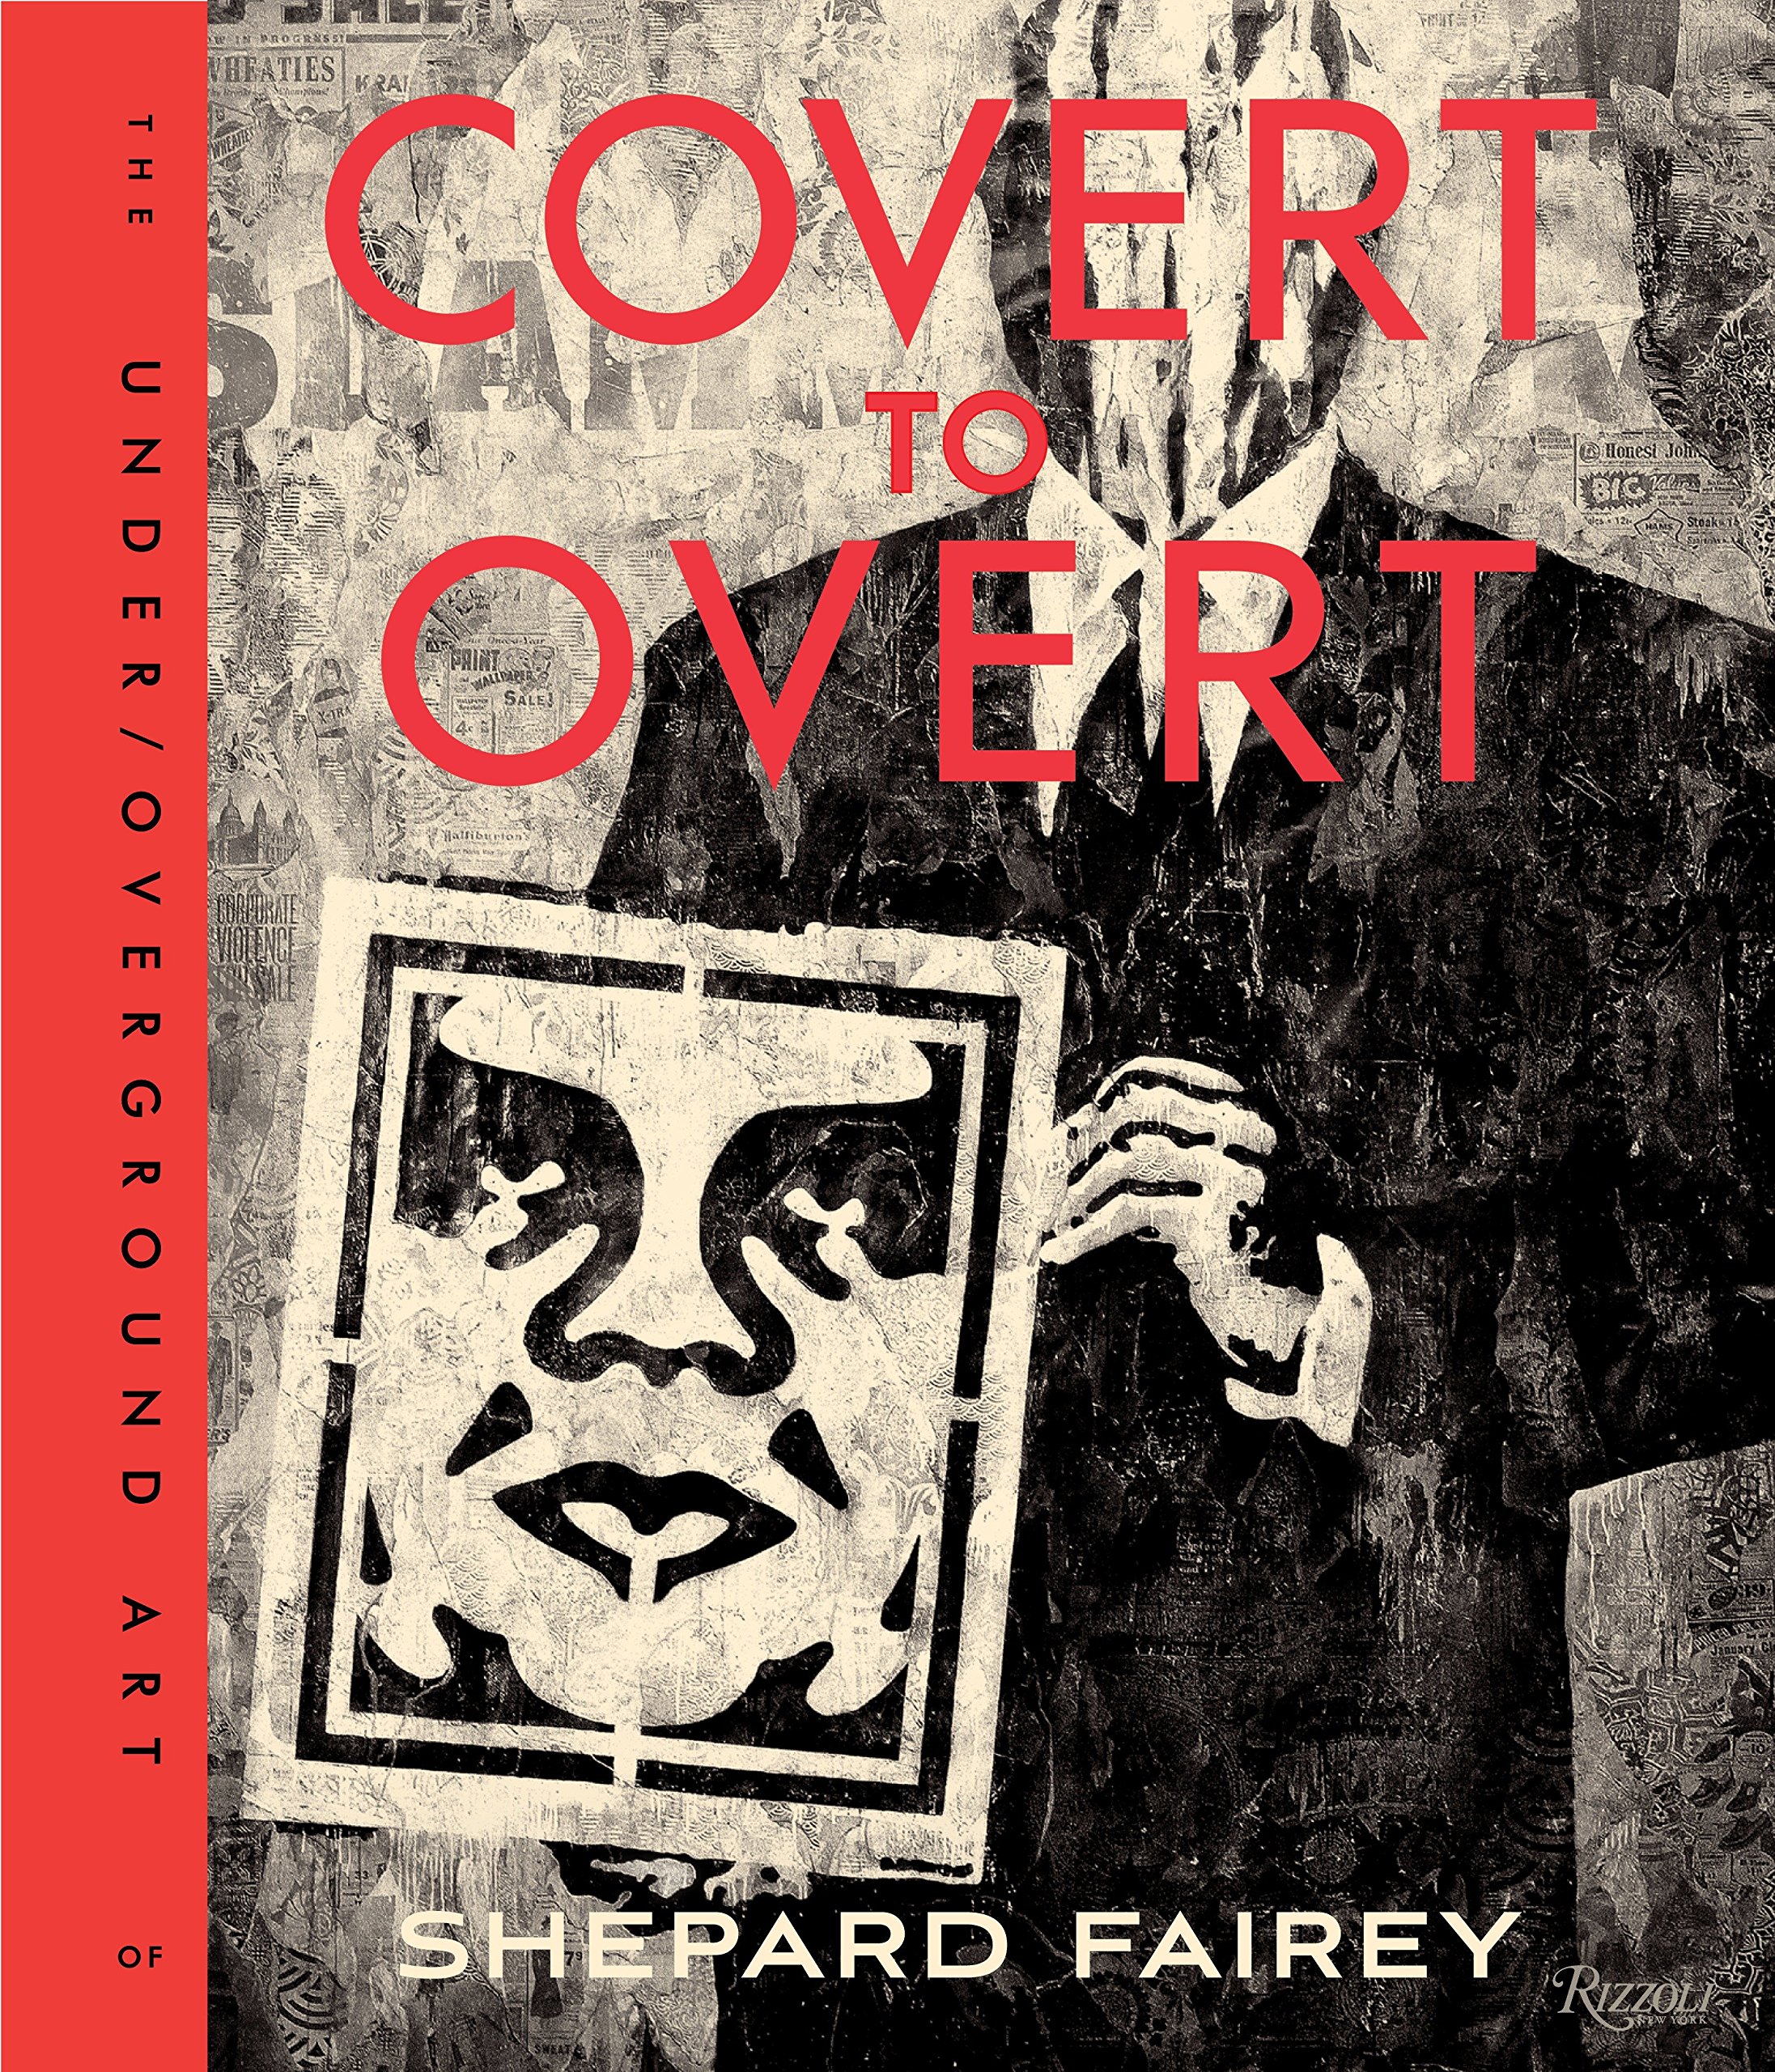 Covert-to-Overt-The-Under-Overground-Art-of-Shepard-Fairey